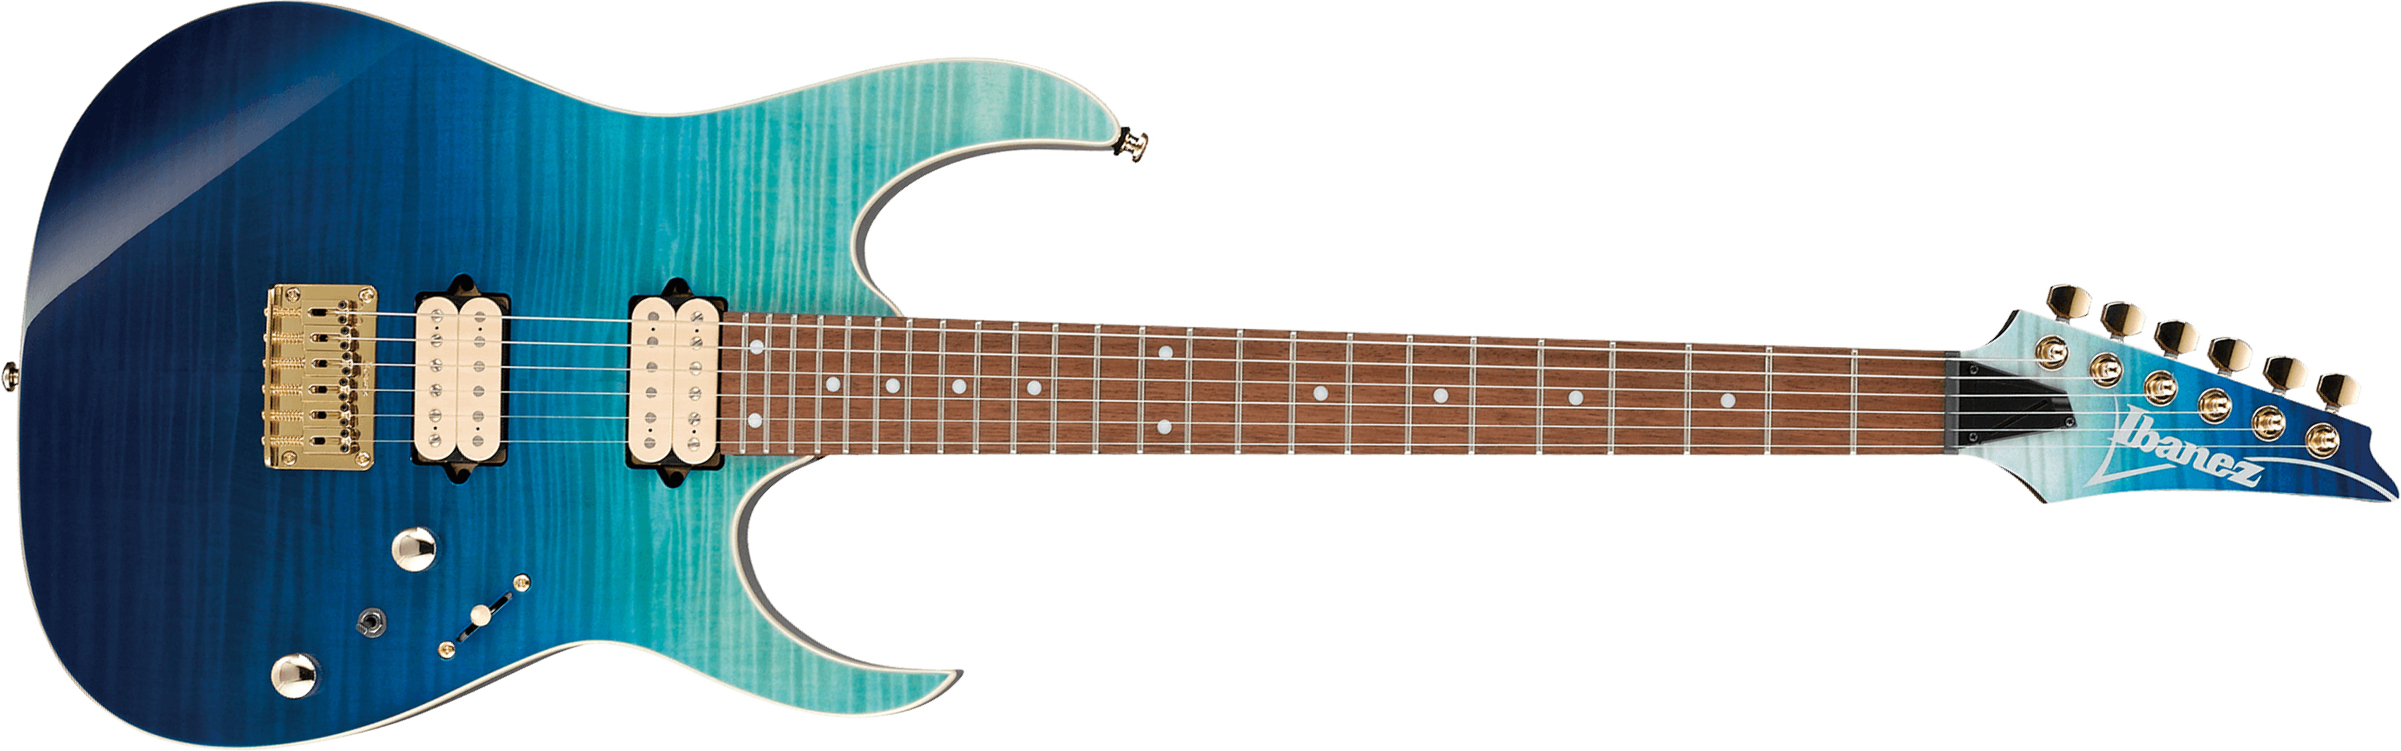 Ibanez Rg421hpfm Brg Standard Hh Ht Ja - Blue Reef Gradation - Str shape electric guitar - Main picture